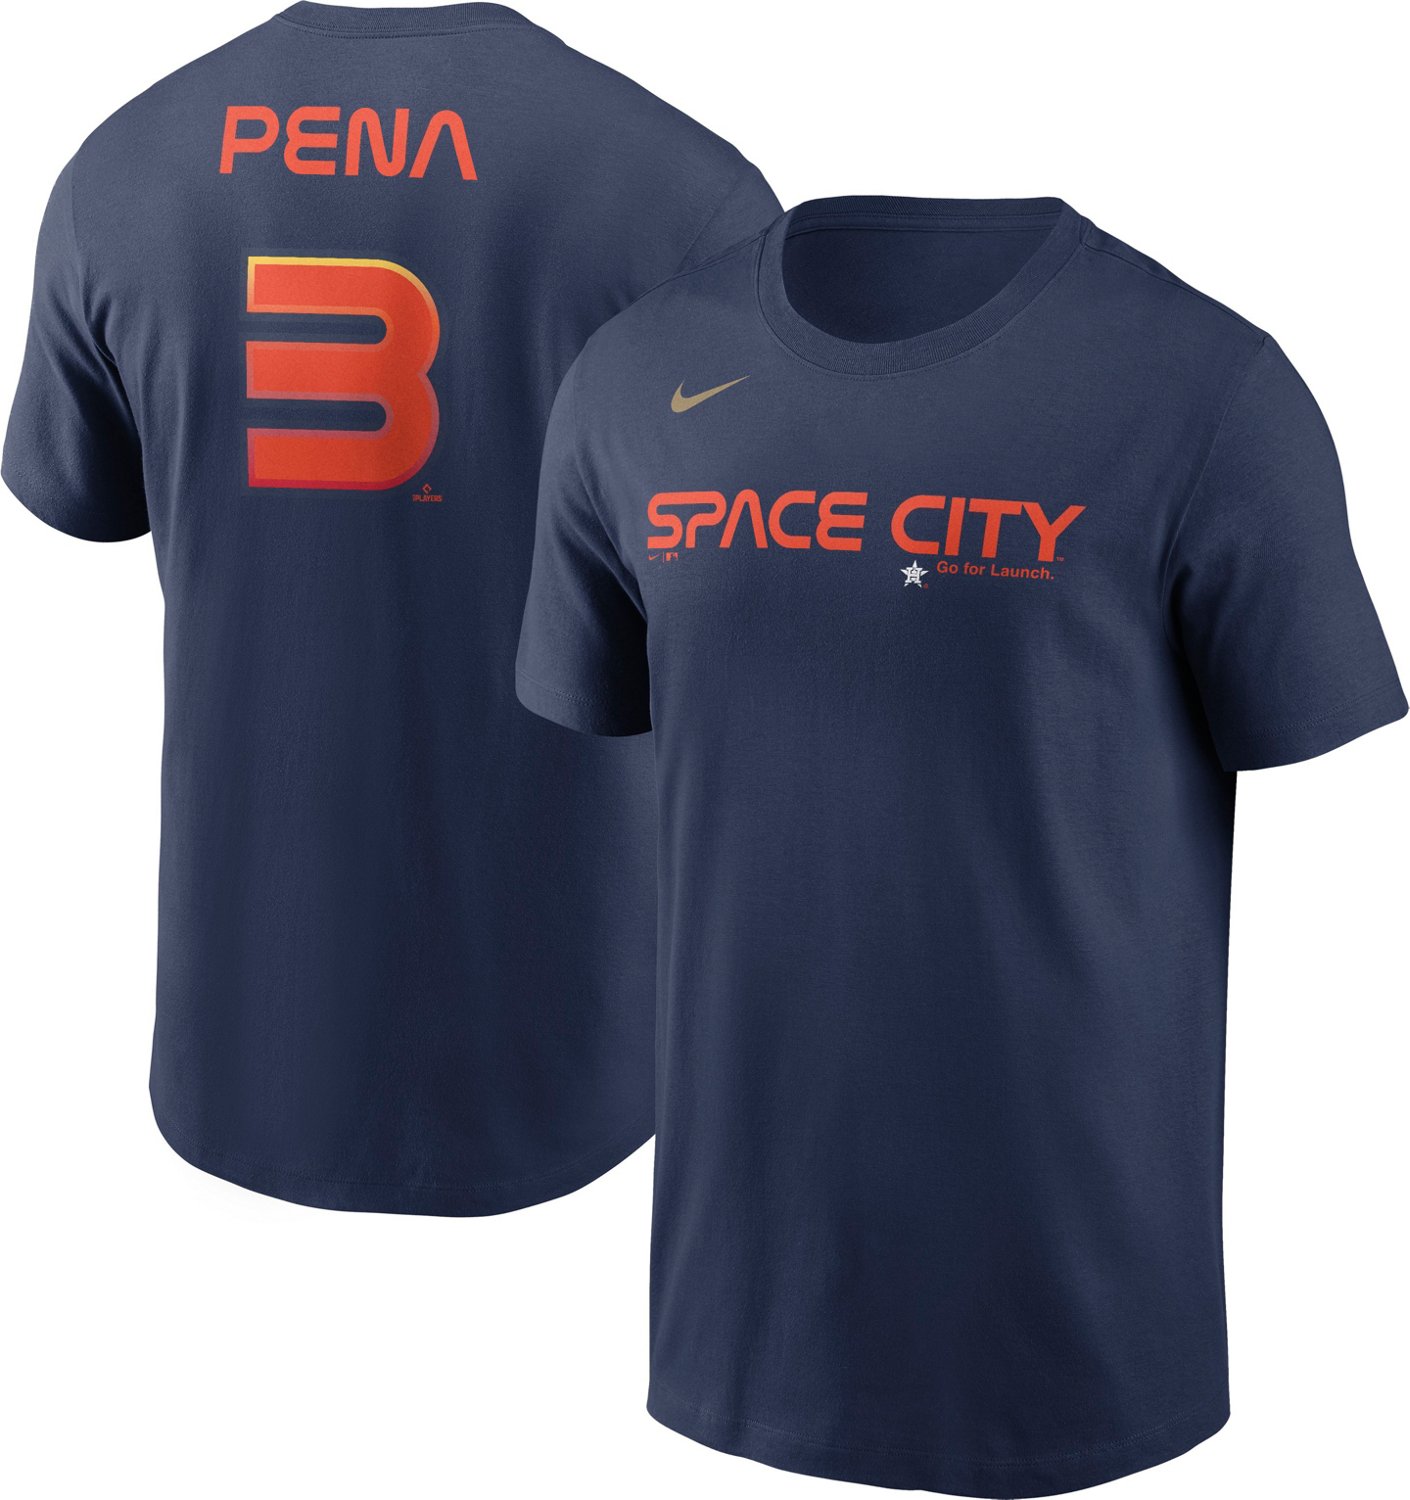 space city jersey pena